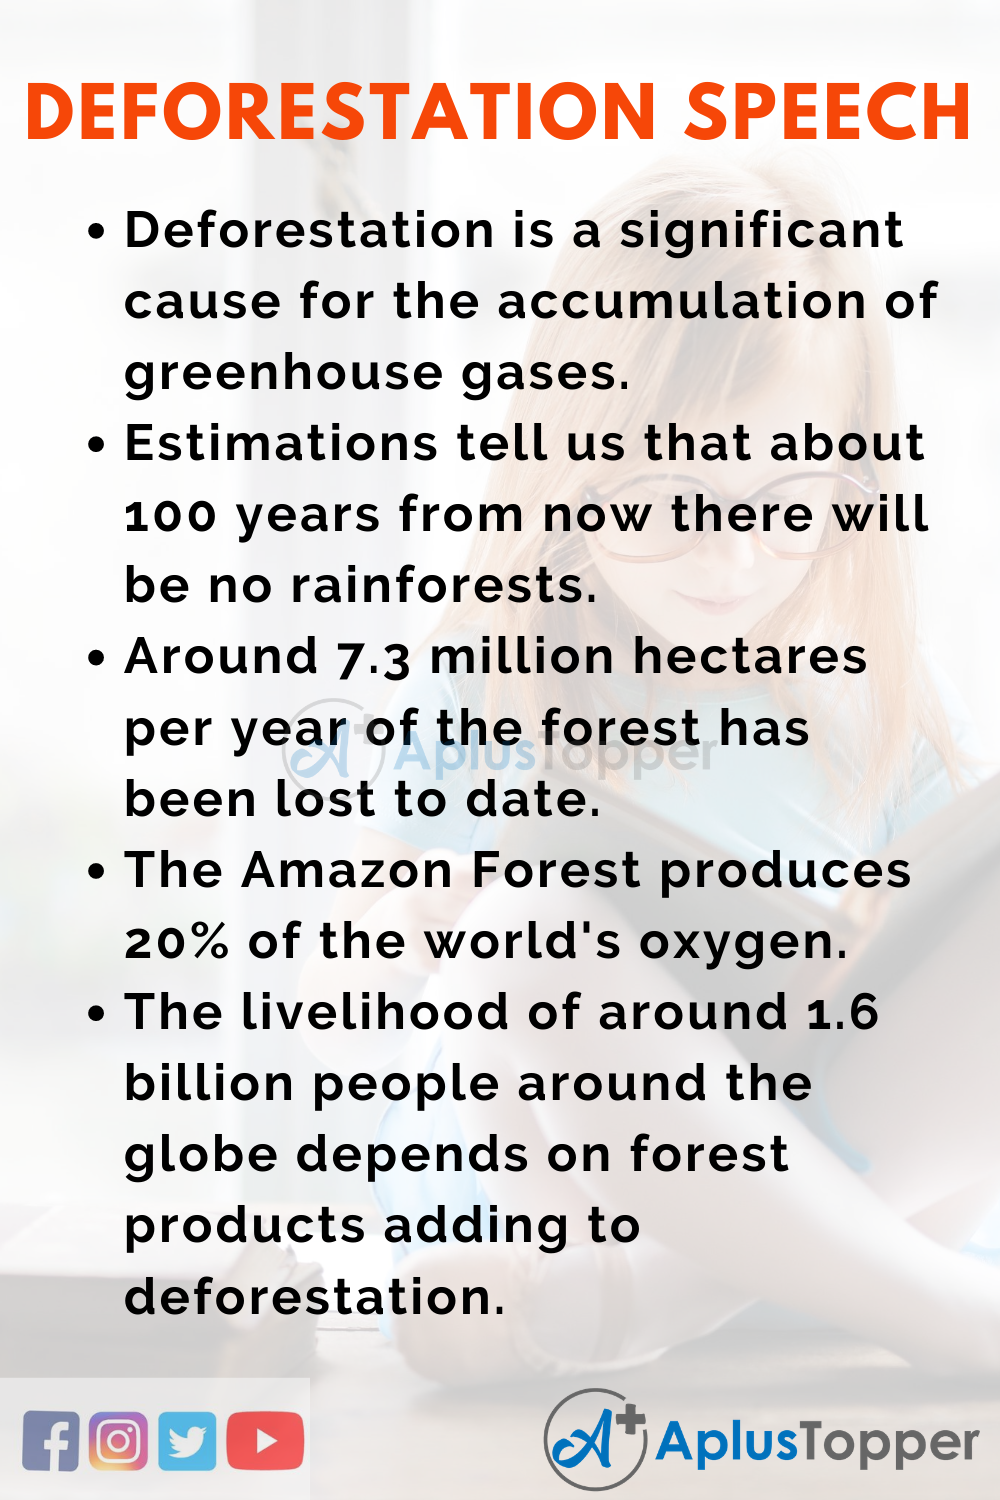 Short Speech On Deforestation 150 Words In English